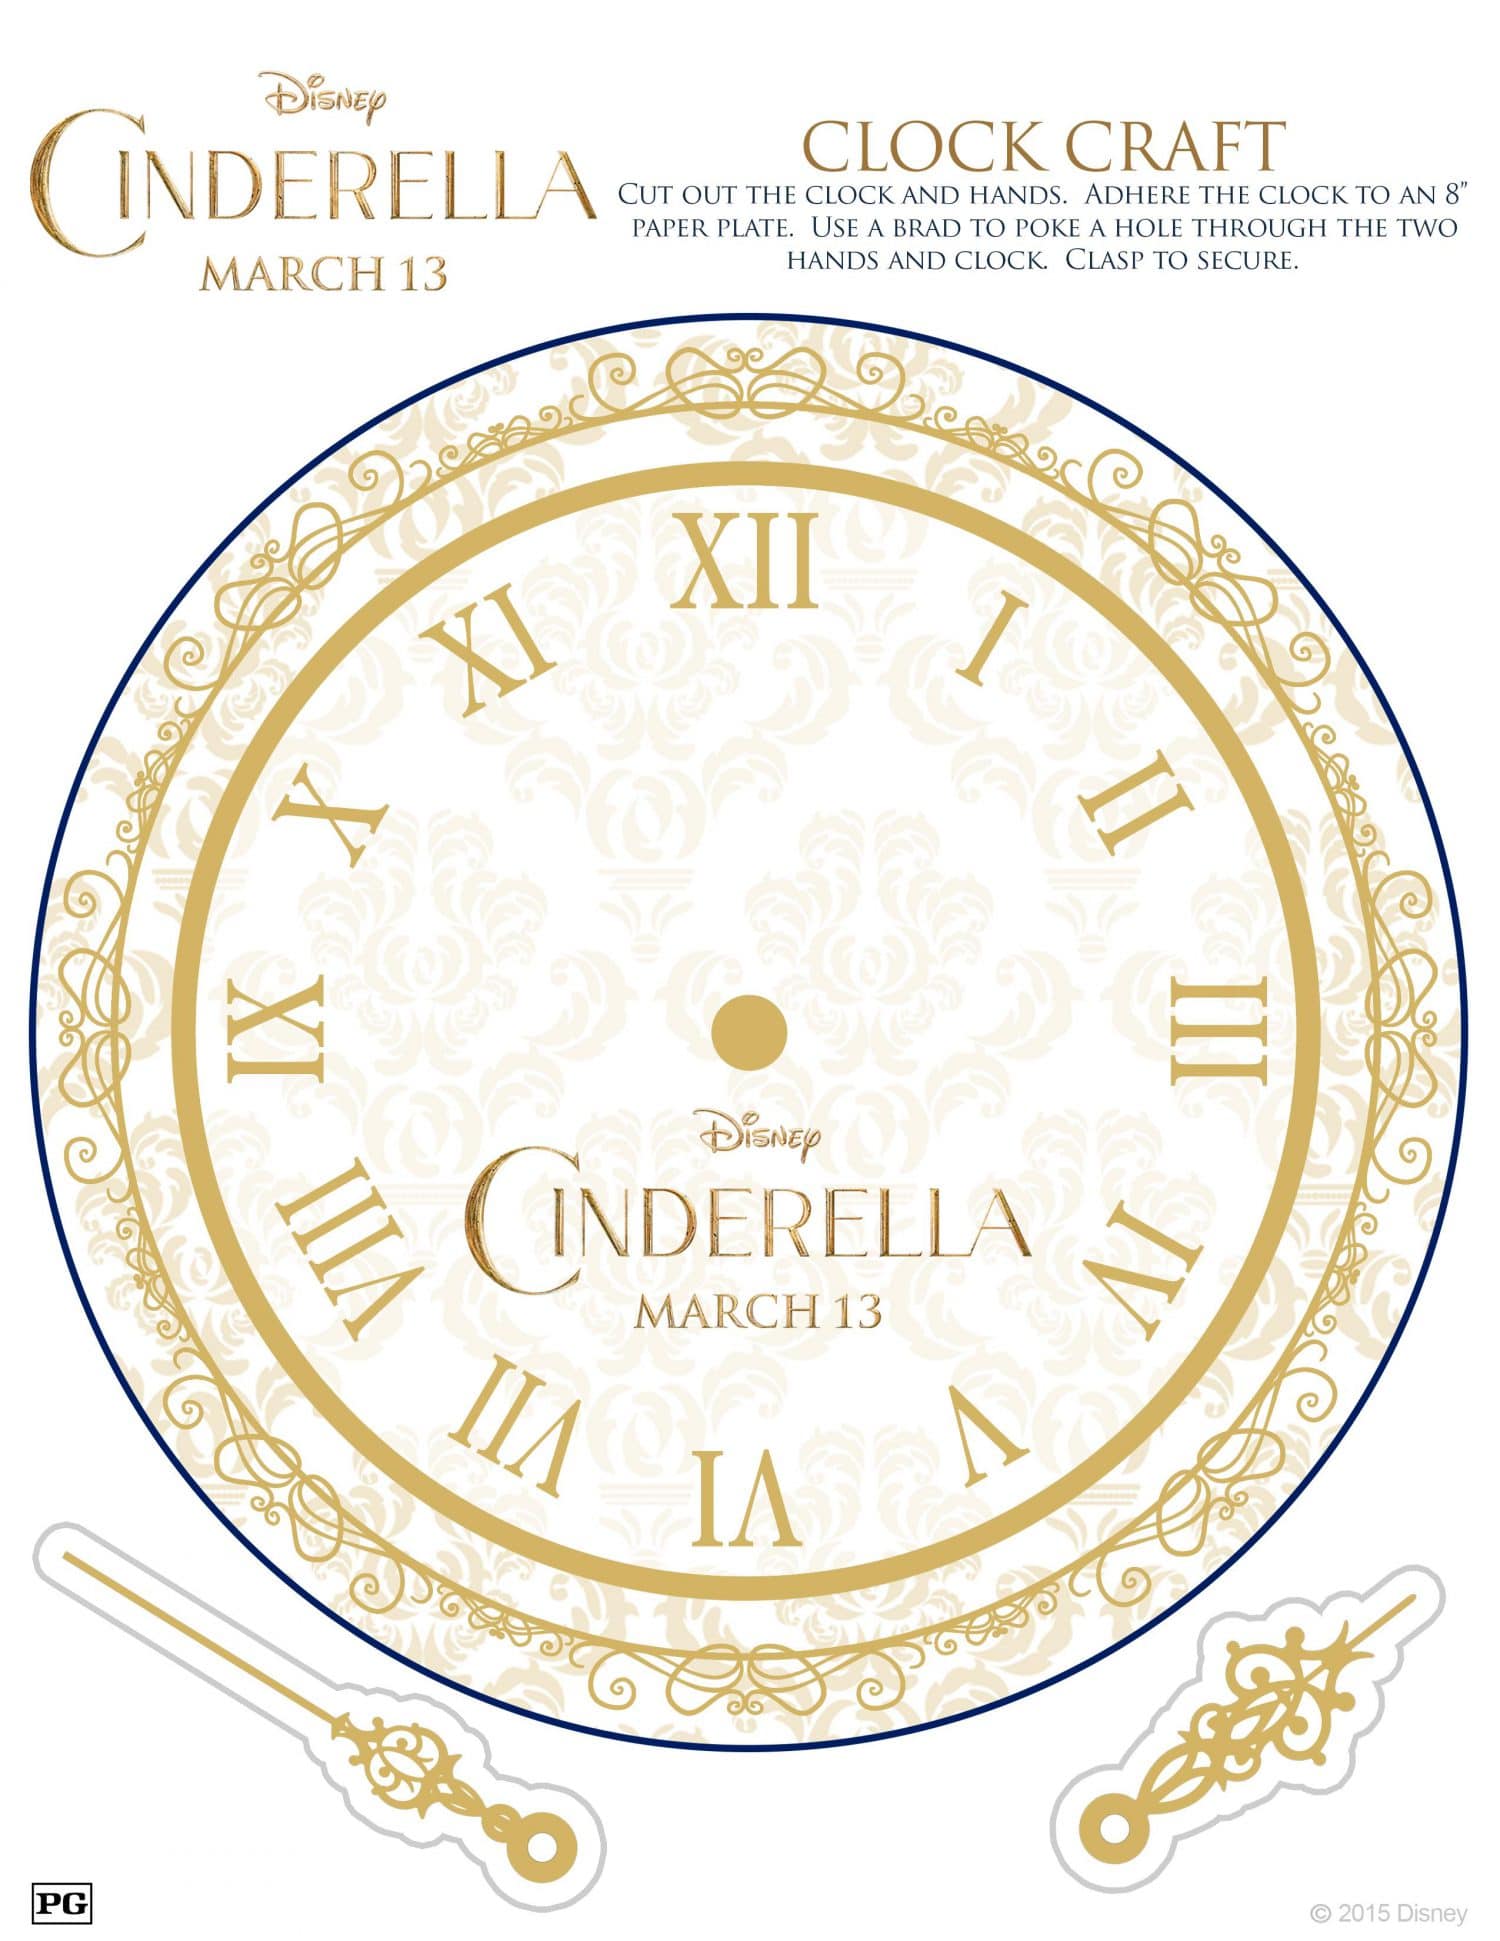 Cinderella clock craft